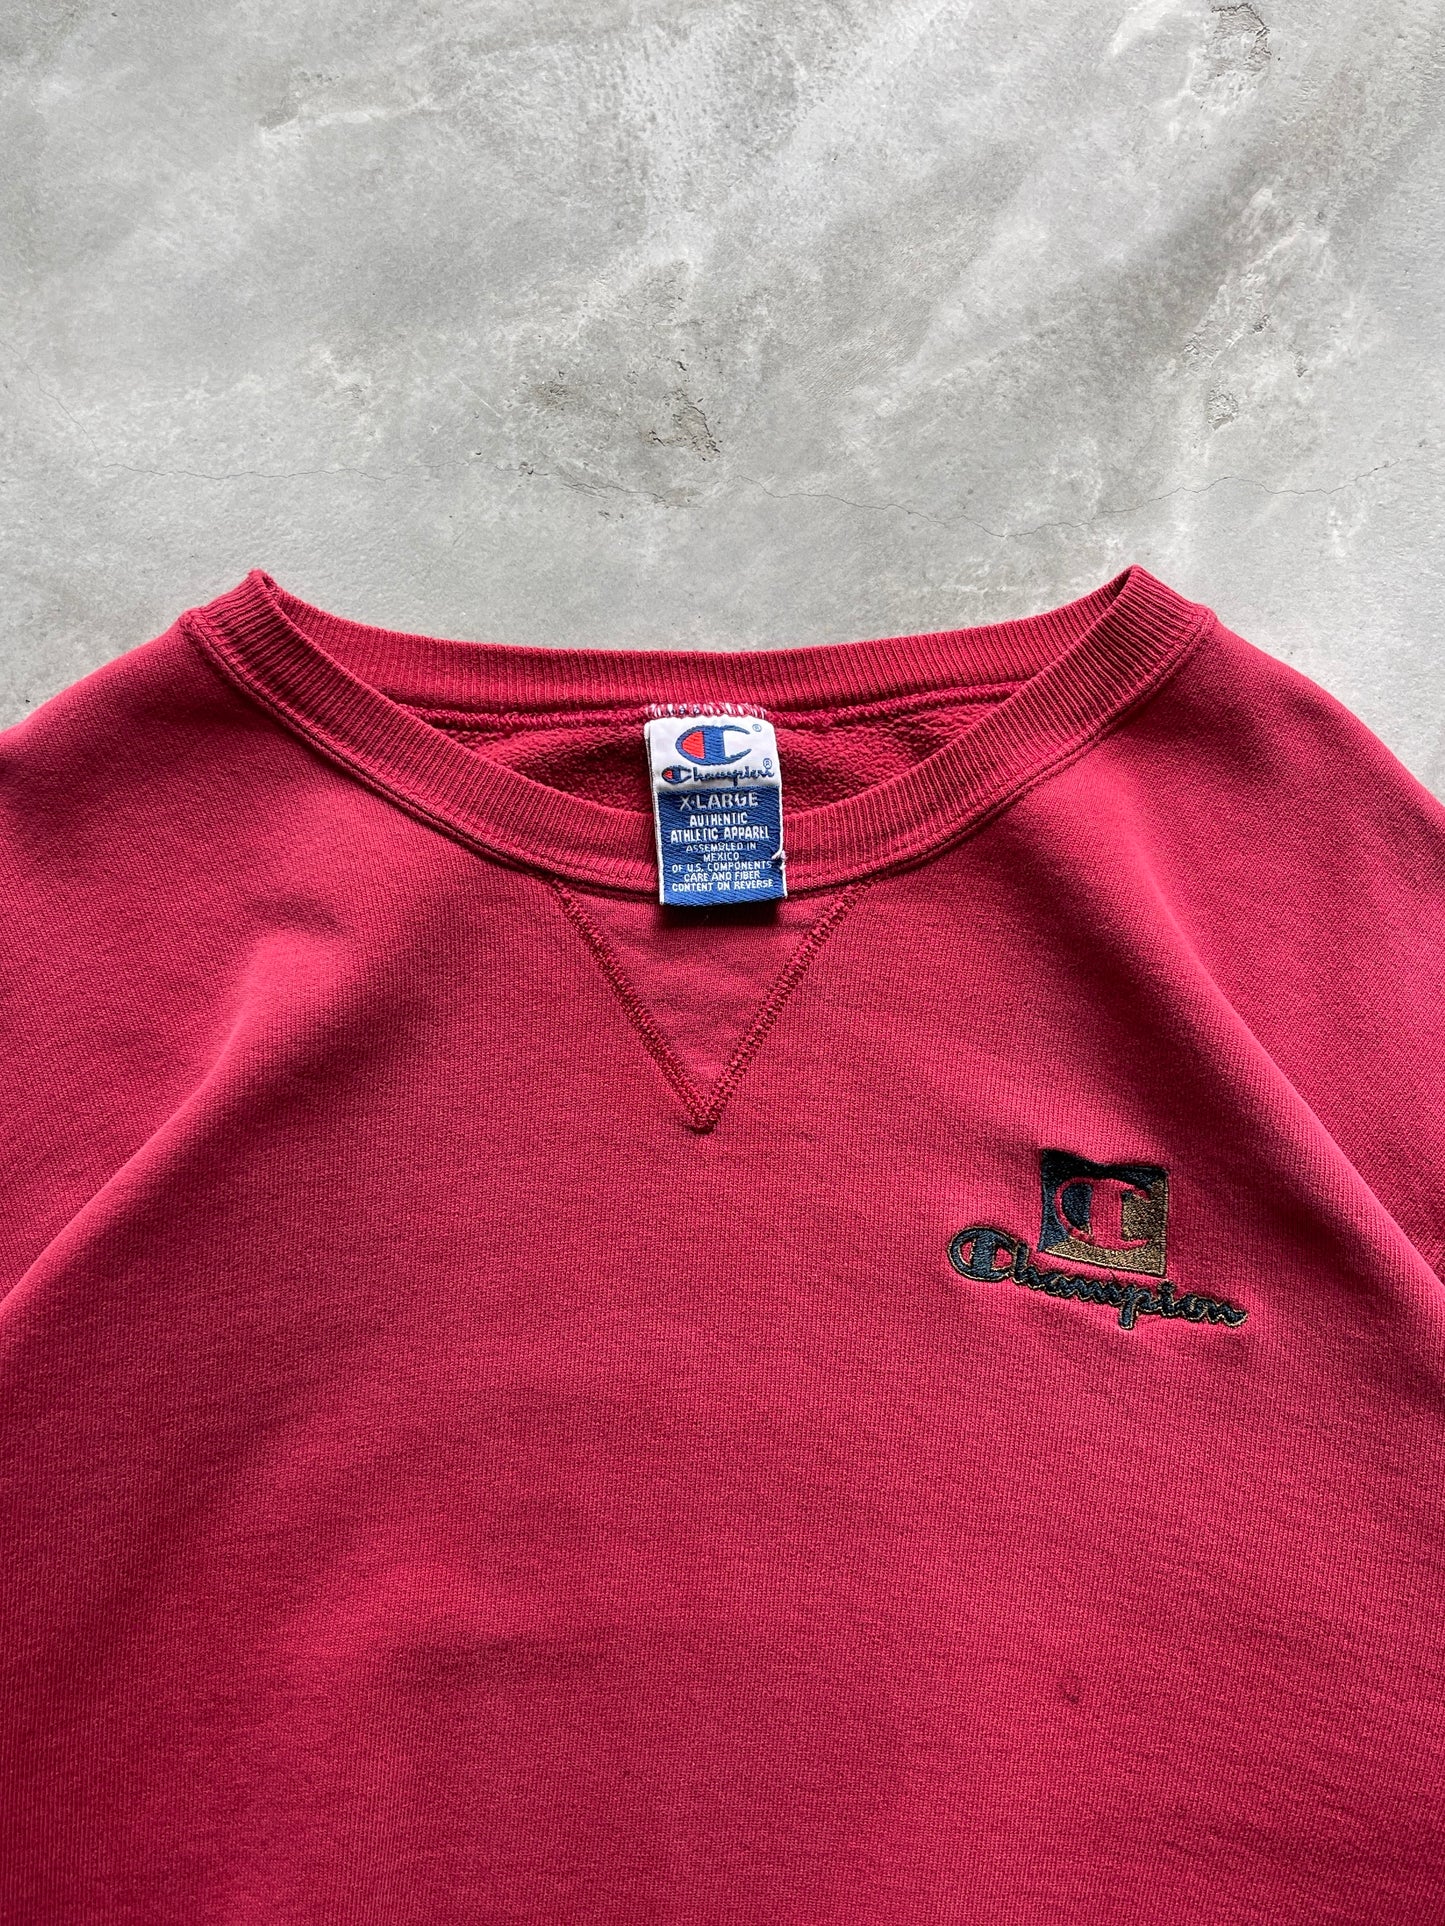 Faded Red Champion Sweatshirt - 90s - XL